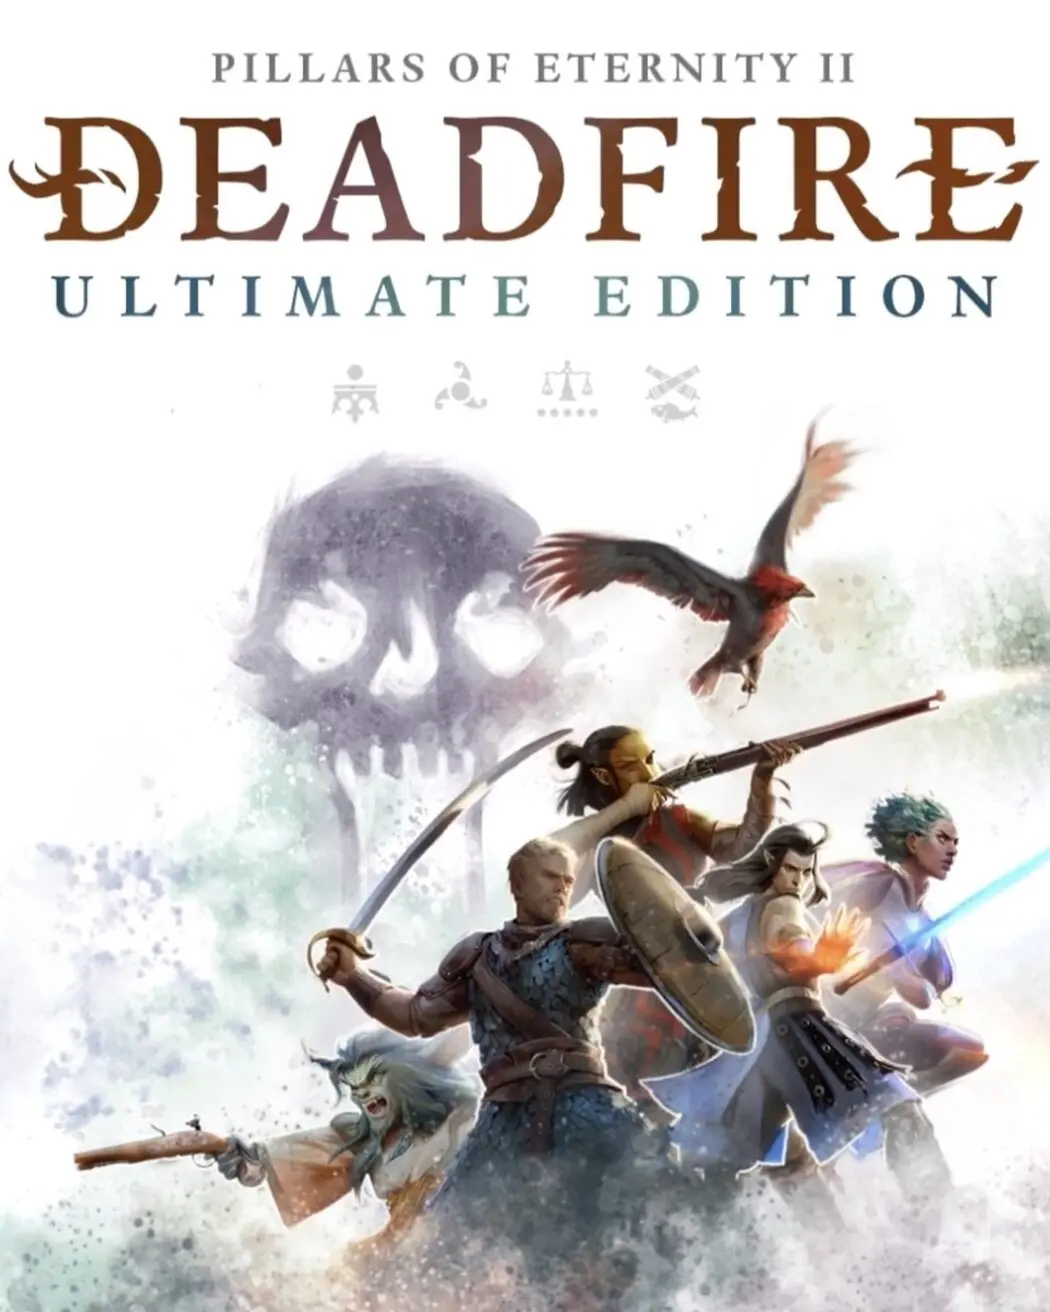 Pillars of Eternity II: Deadfire Ultimate Edition (AR) (Xbox One / Xbox Series X|S) - Xbox Live - Digital Code